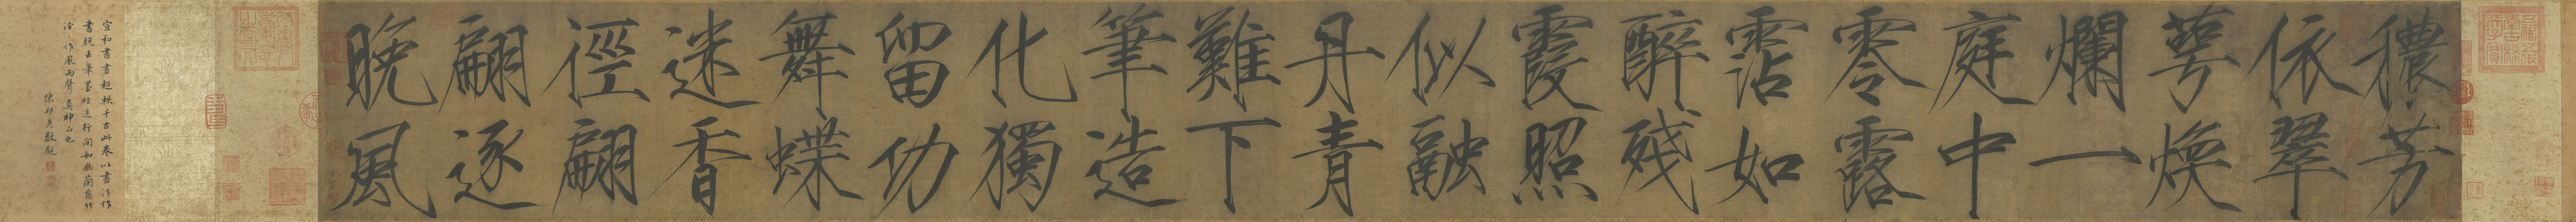 General 23451x2020 Chinese kanji artwork digital art